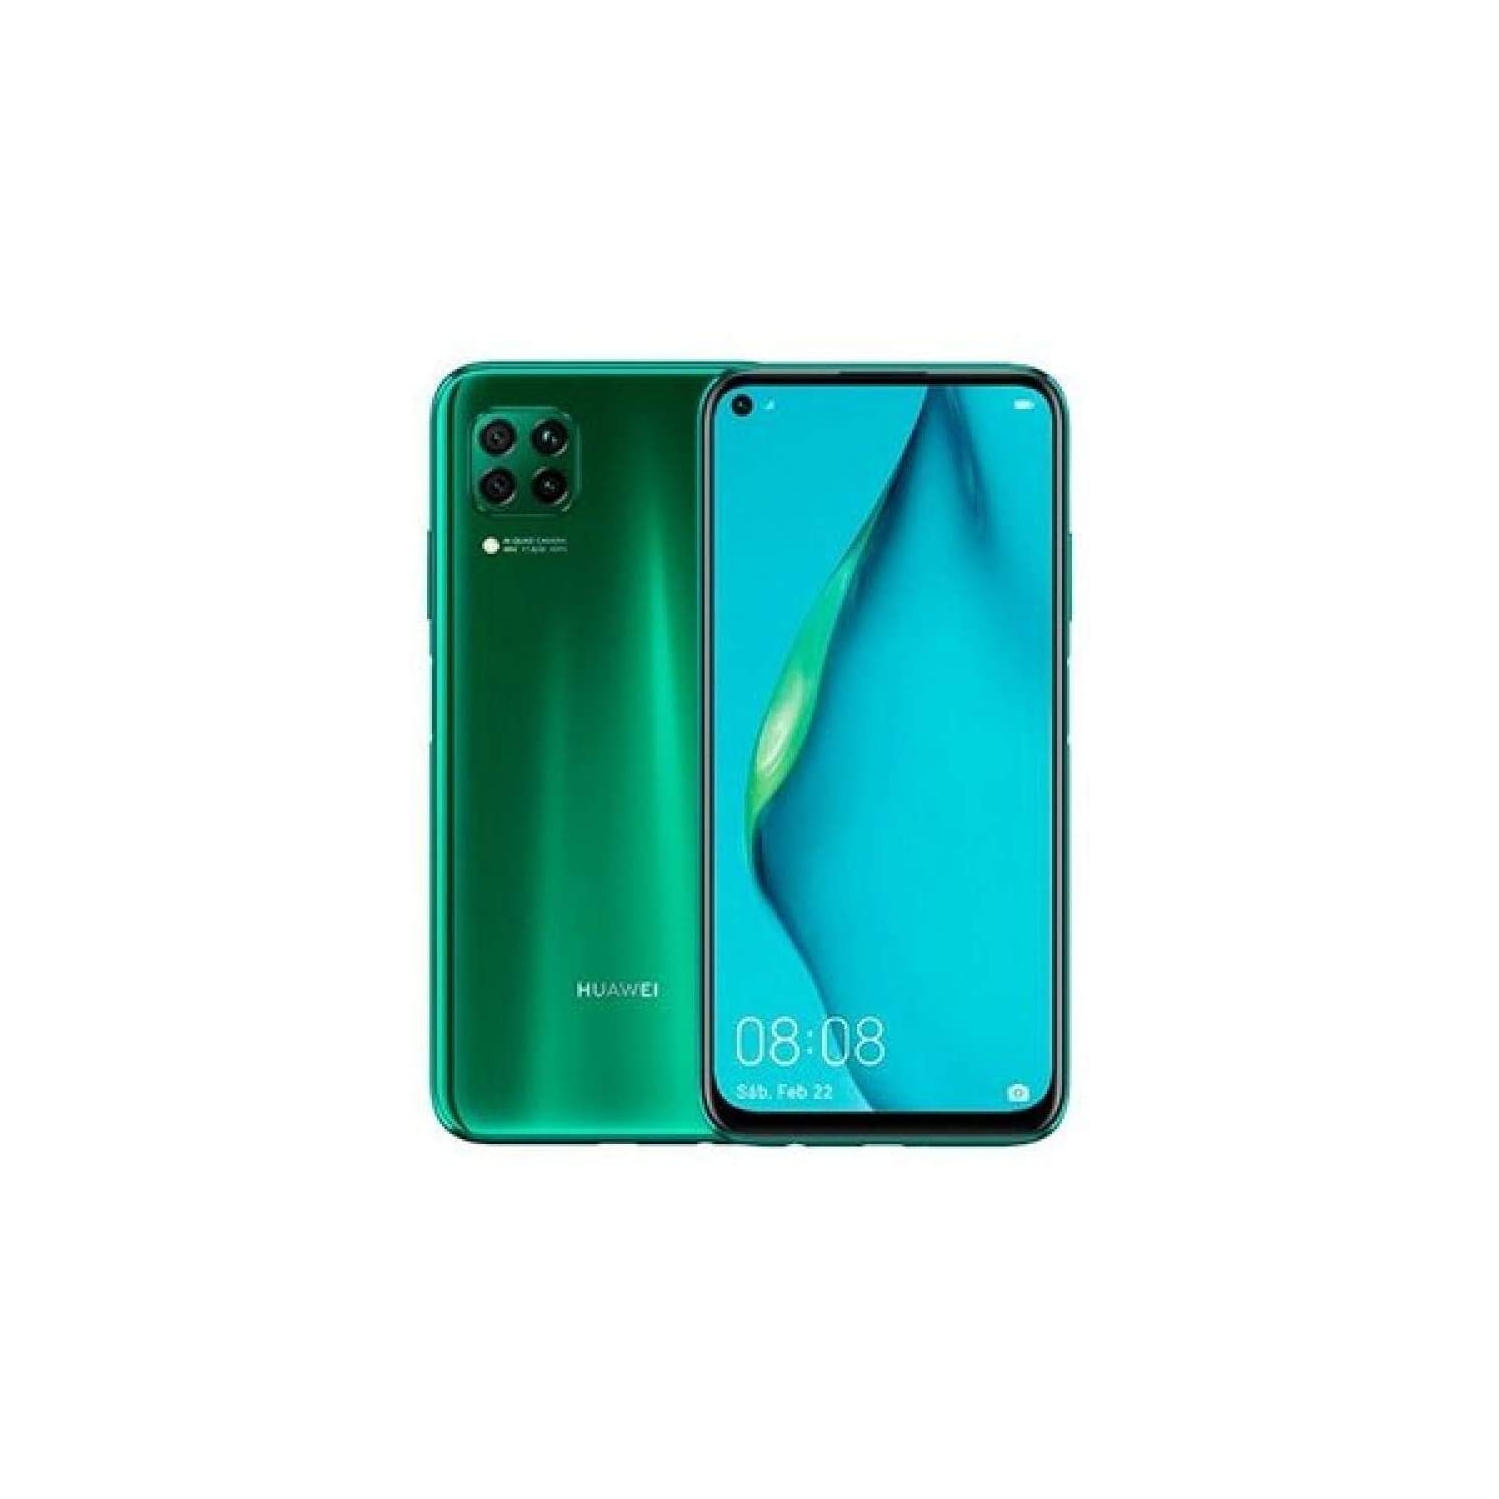 Huawei P40 Lite 6.4" 128/6GB RAM - Factory Unlocked Smartphone - Brand New - Green